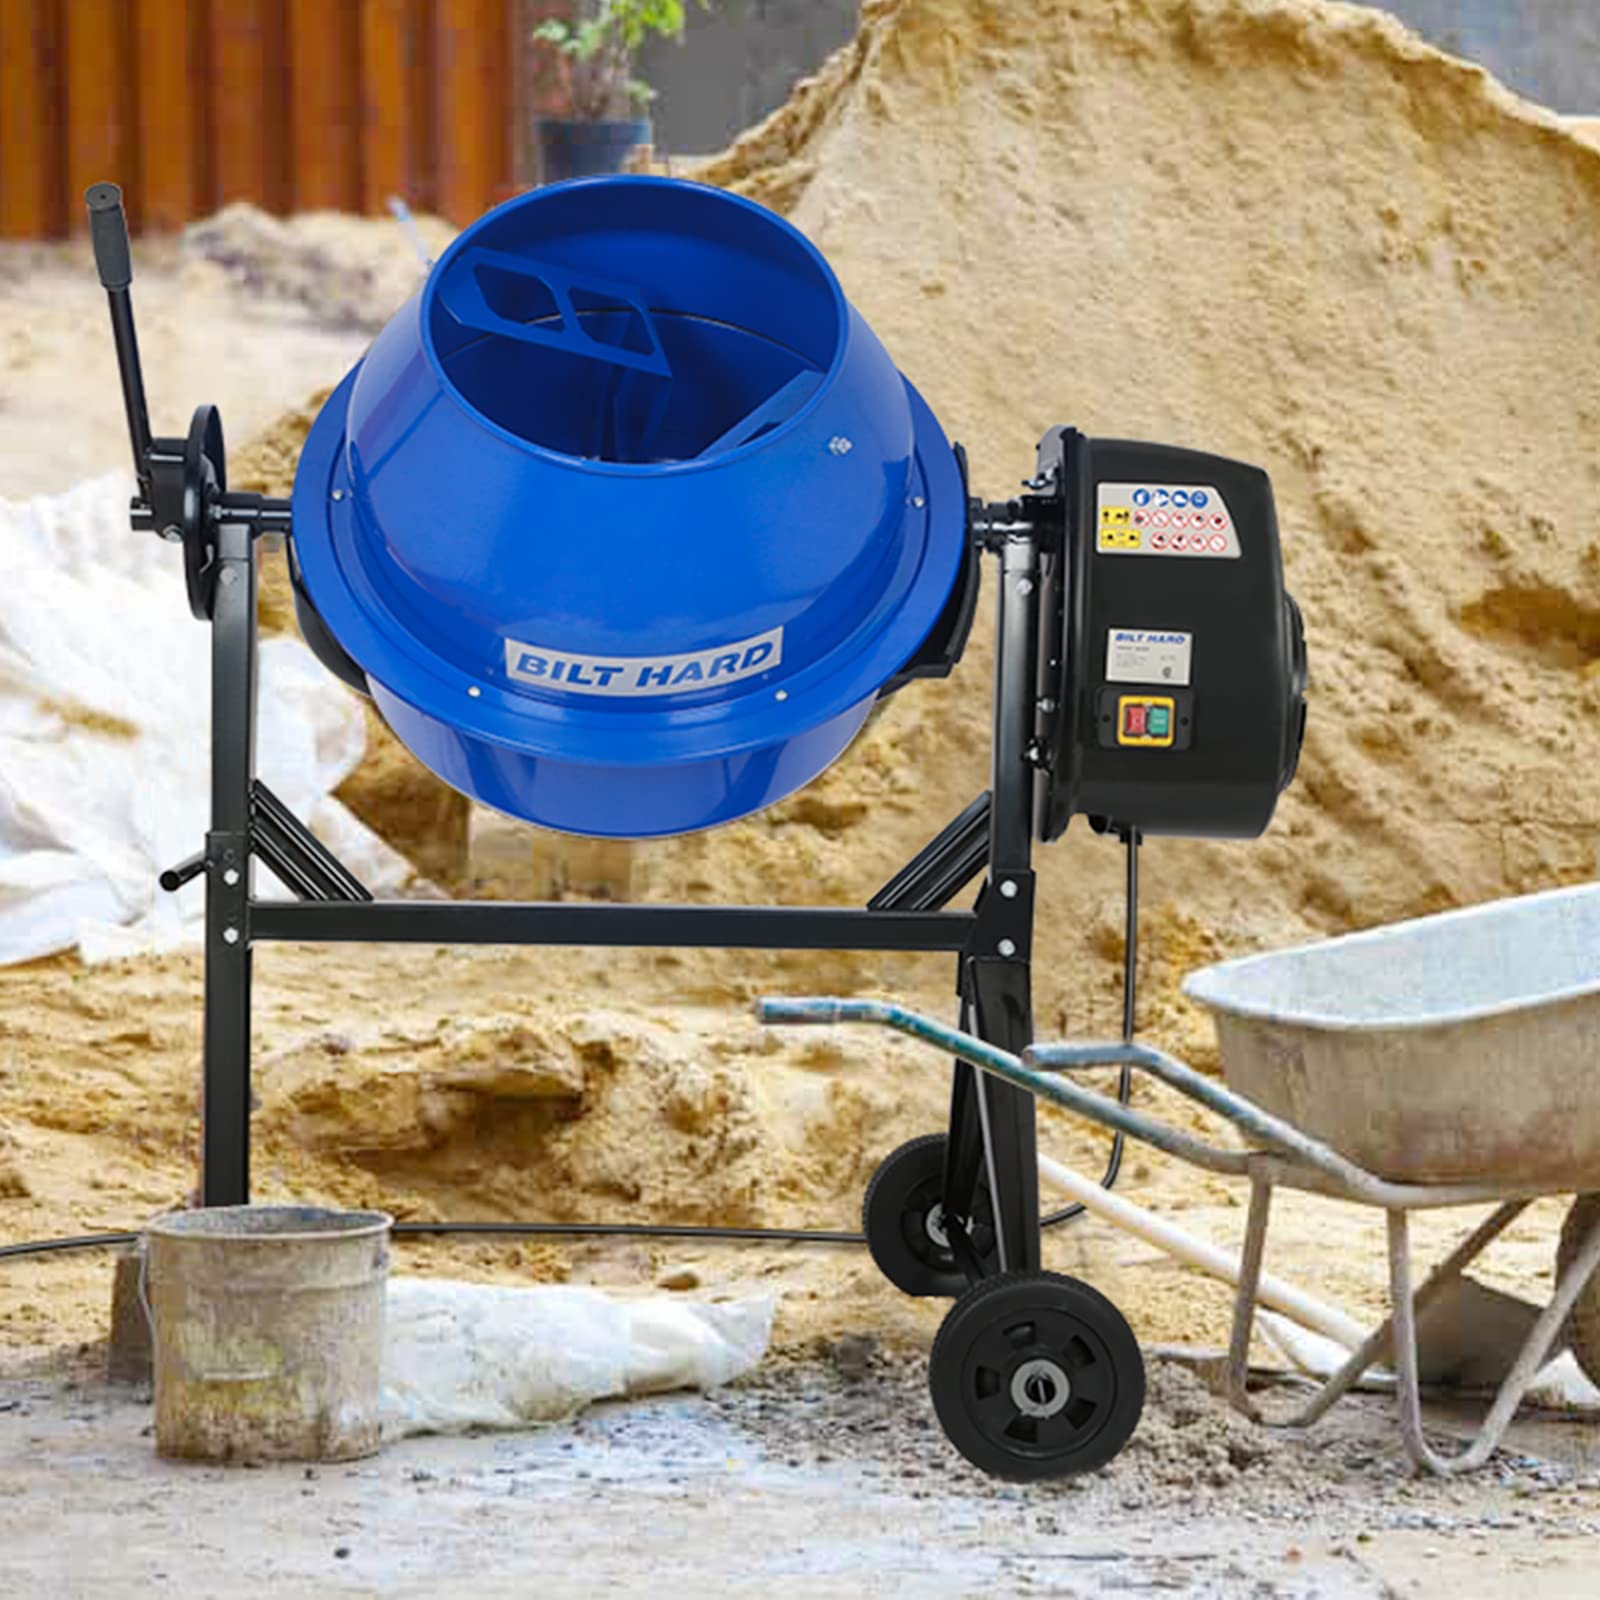 BILT HARD Electric Cement Mixer, 4 Cubic Ft. Portable Concrete Mixer Machine, Wheelbarrow Cement Mixing Tools for Stucco